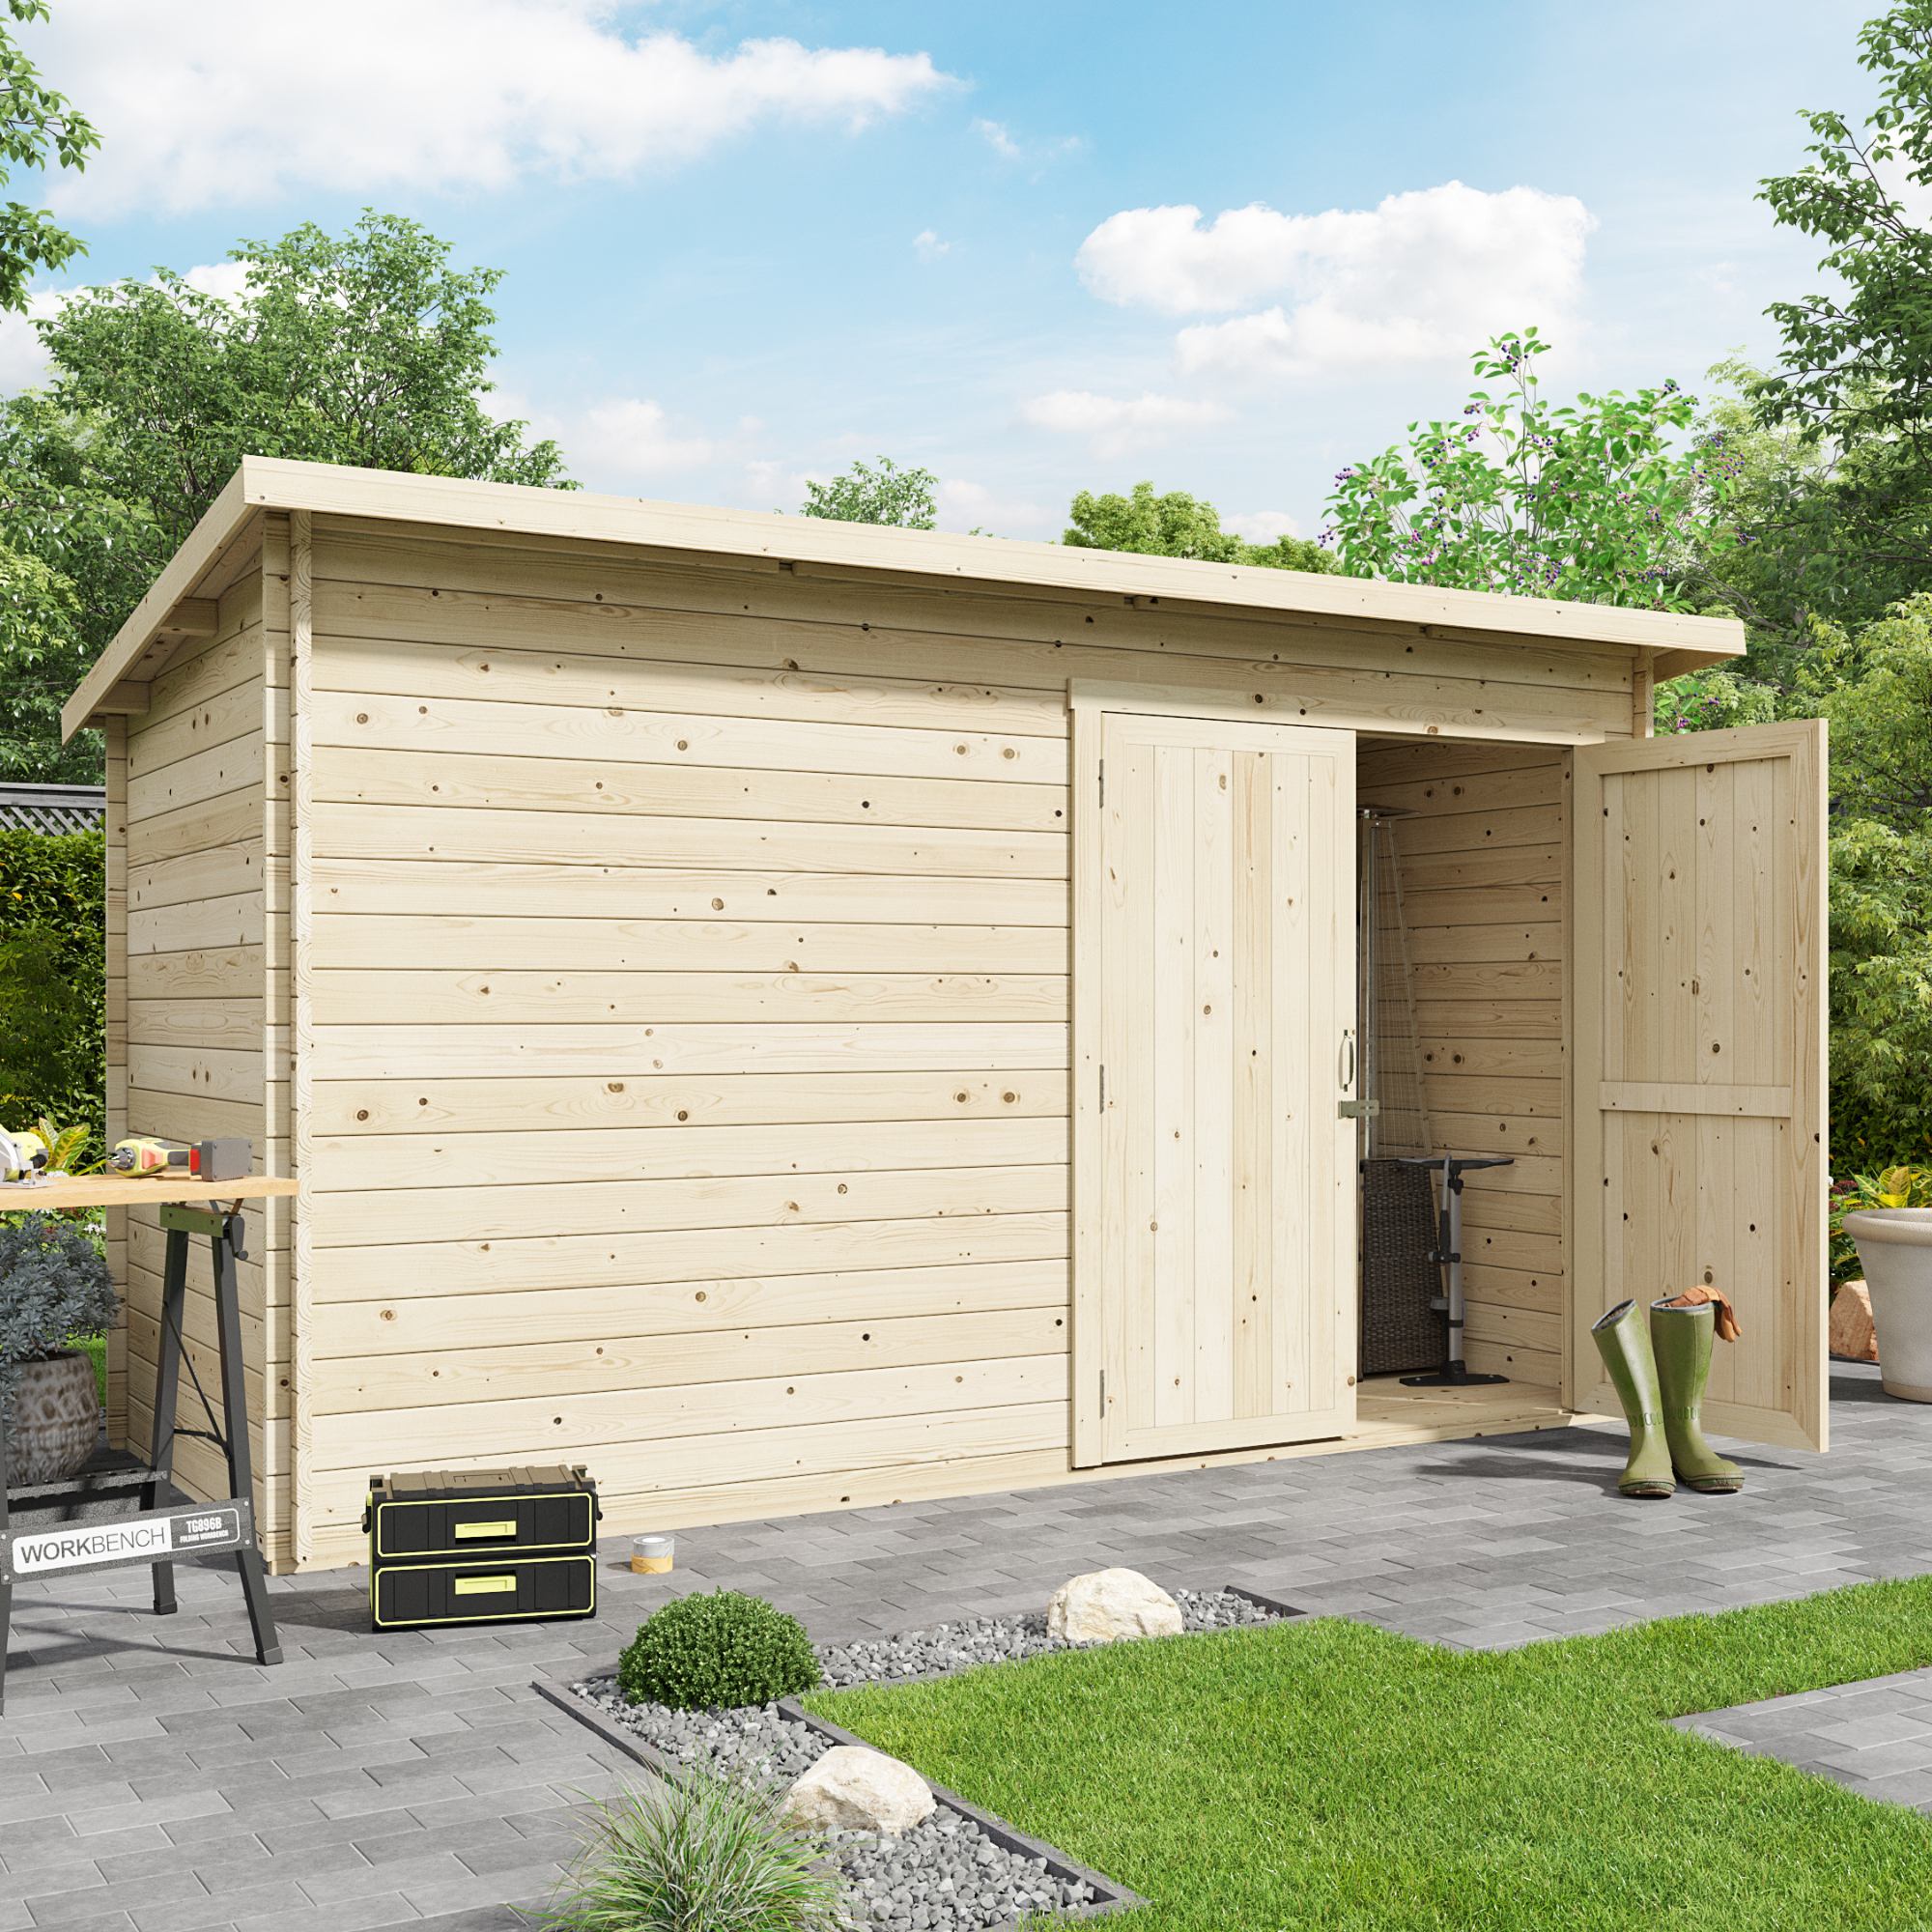 12x6 Log Cabin - BillyOh Pent Log Cabin Windowless Heavy Duty Shed Range - Double Door Garden Storage 19mm